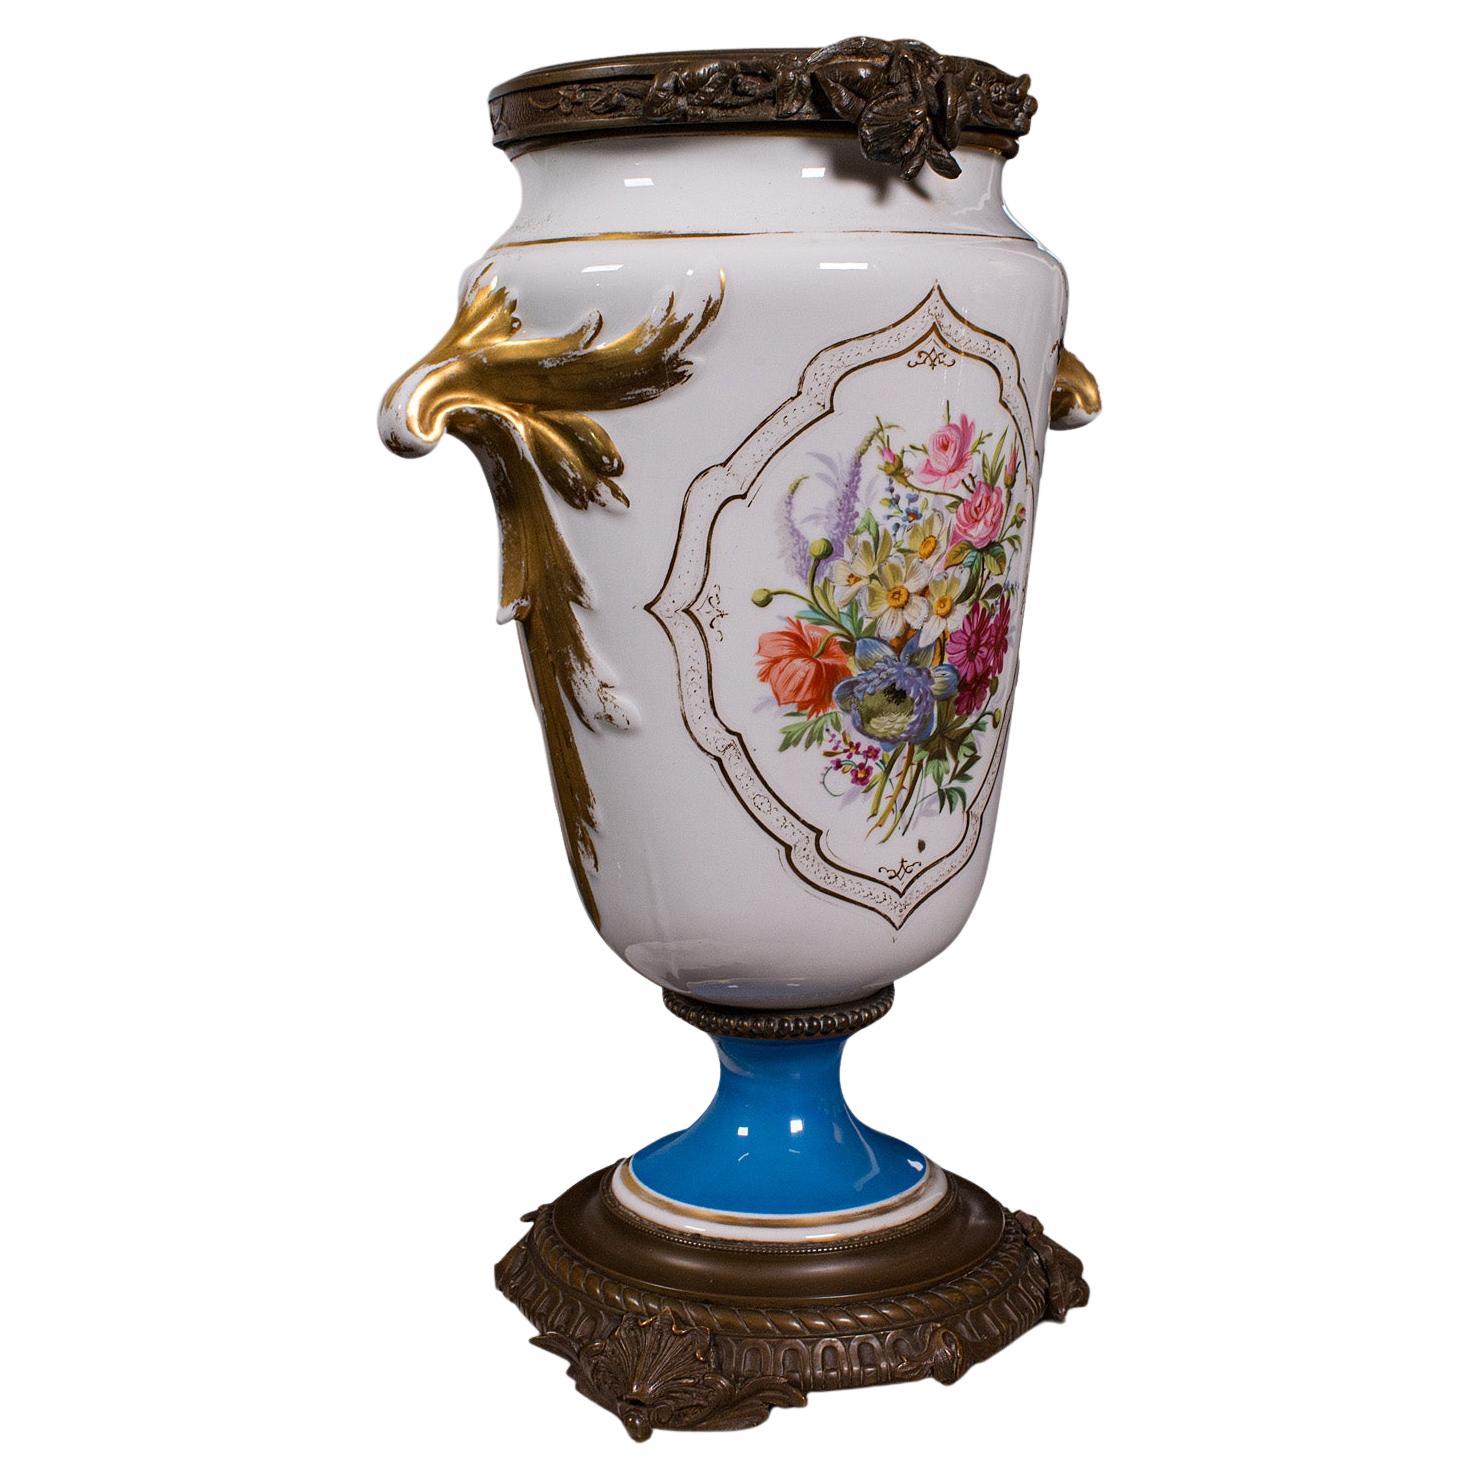 Antique Decorative Jardiniere, French, Ceramic, Display Planter, Vase, Victorian